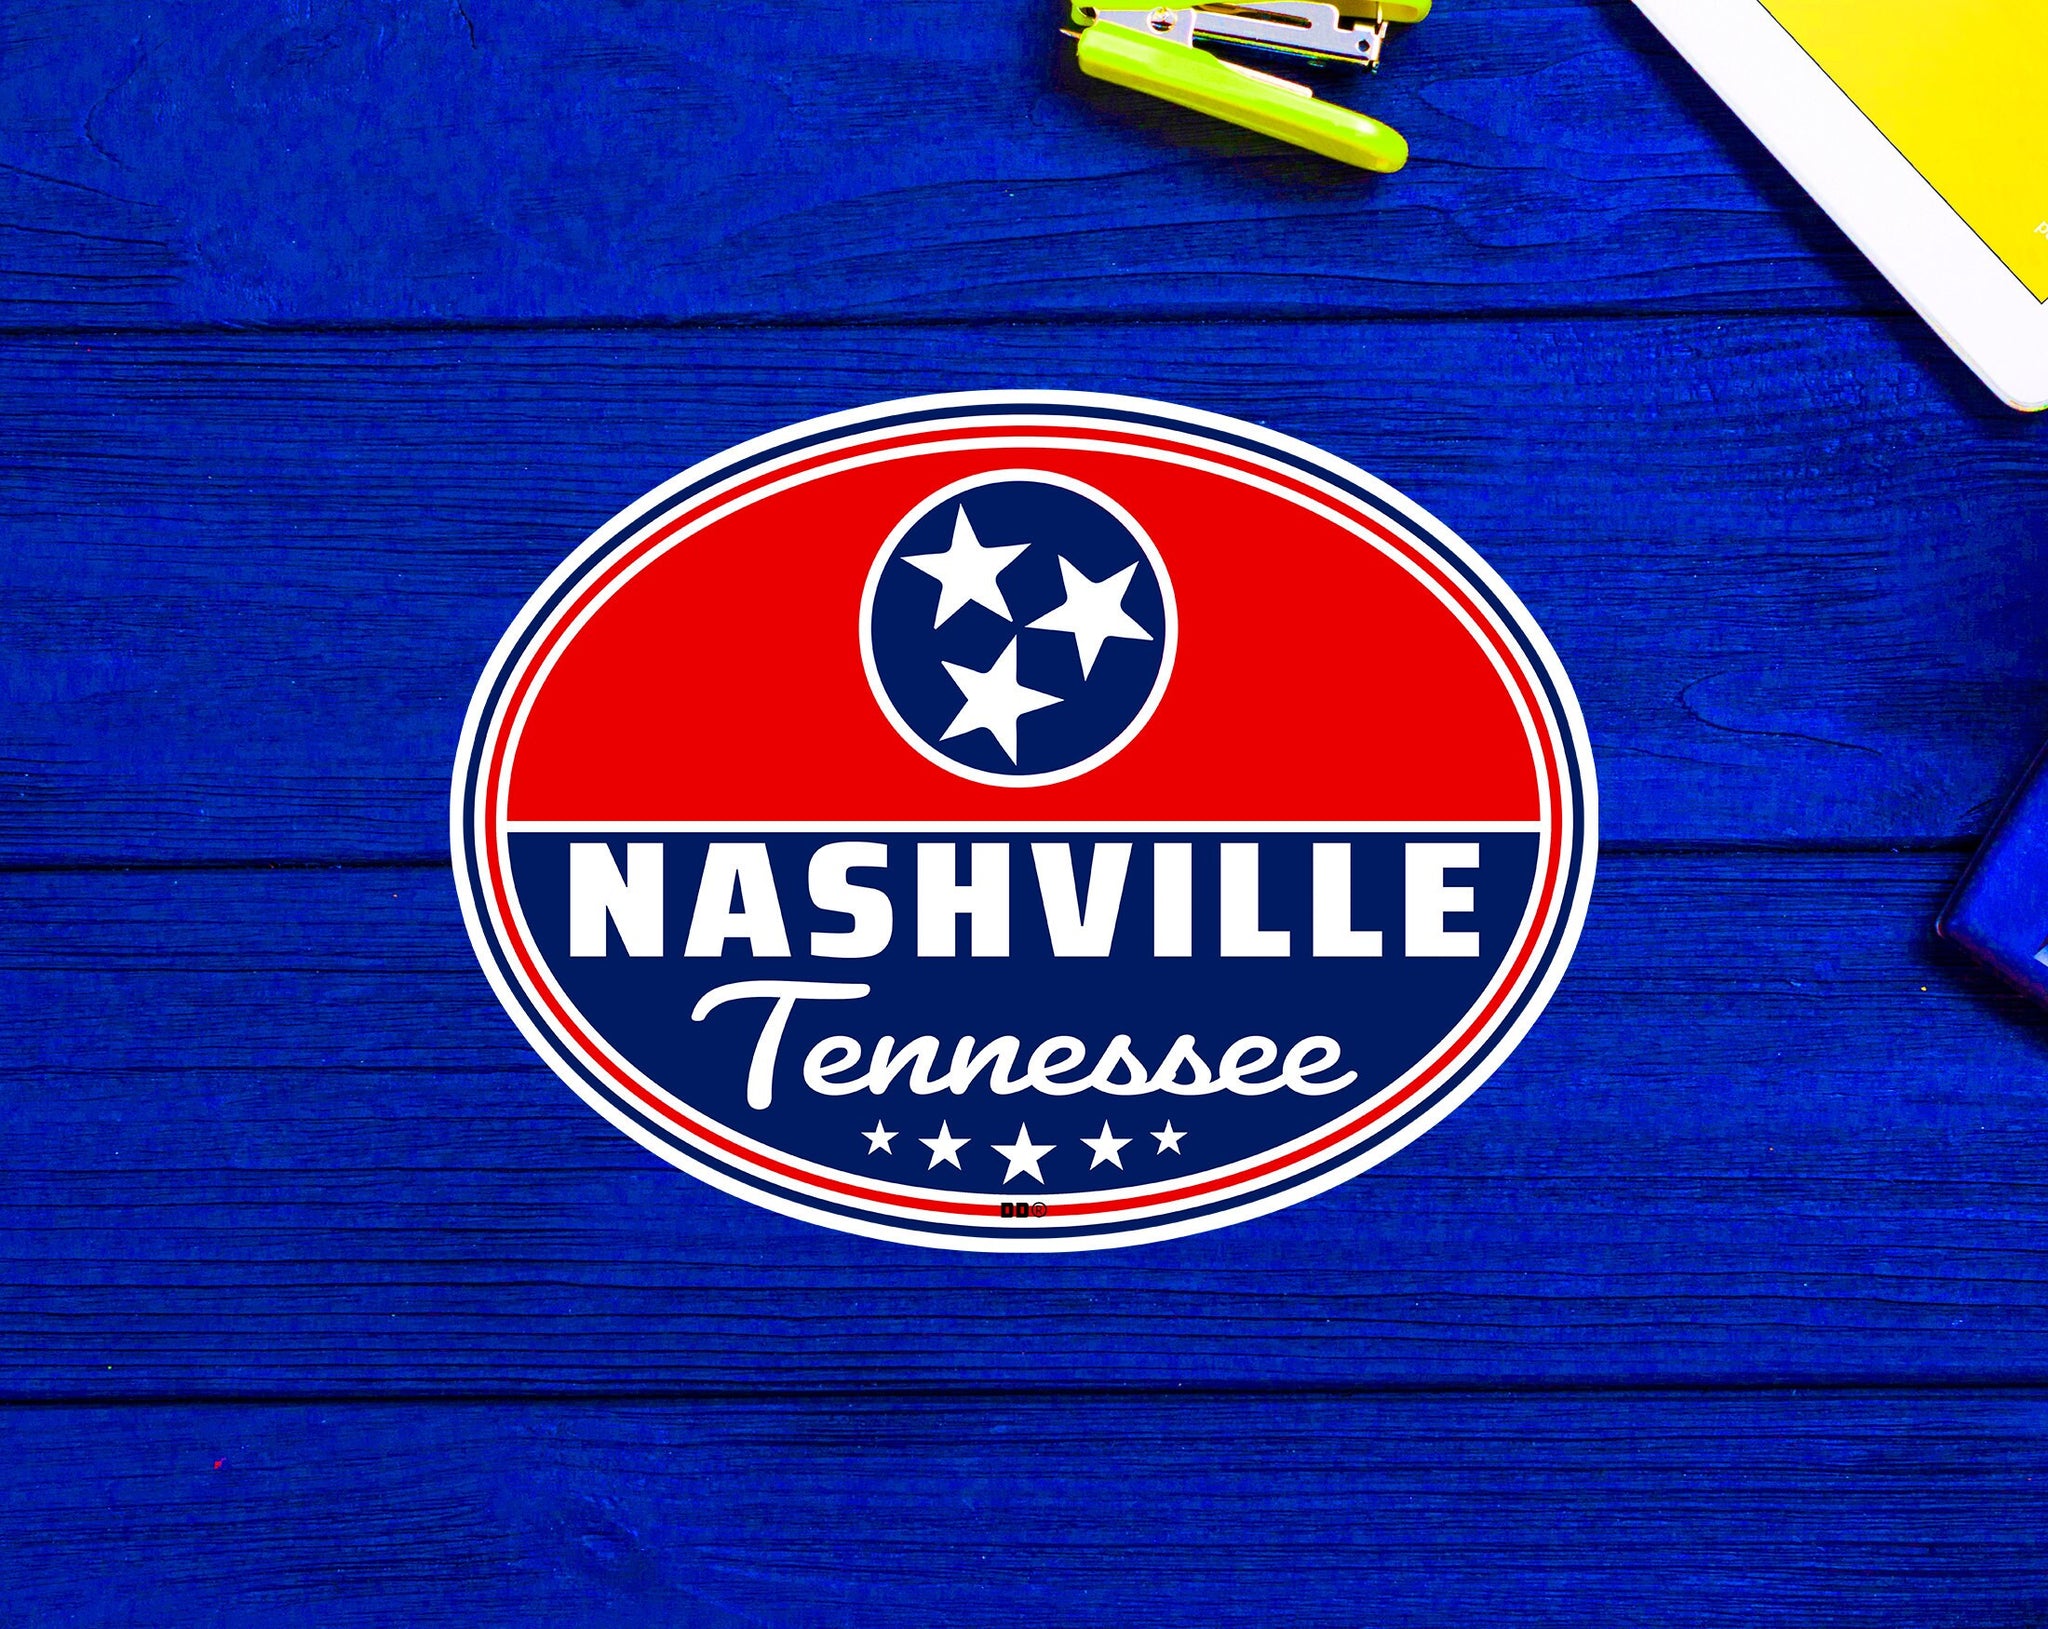 Nashville Tennessee Euro Oval Sticker 4" x 3"